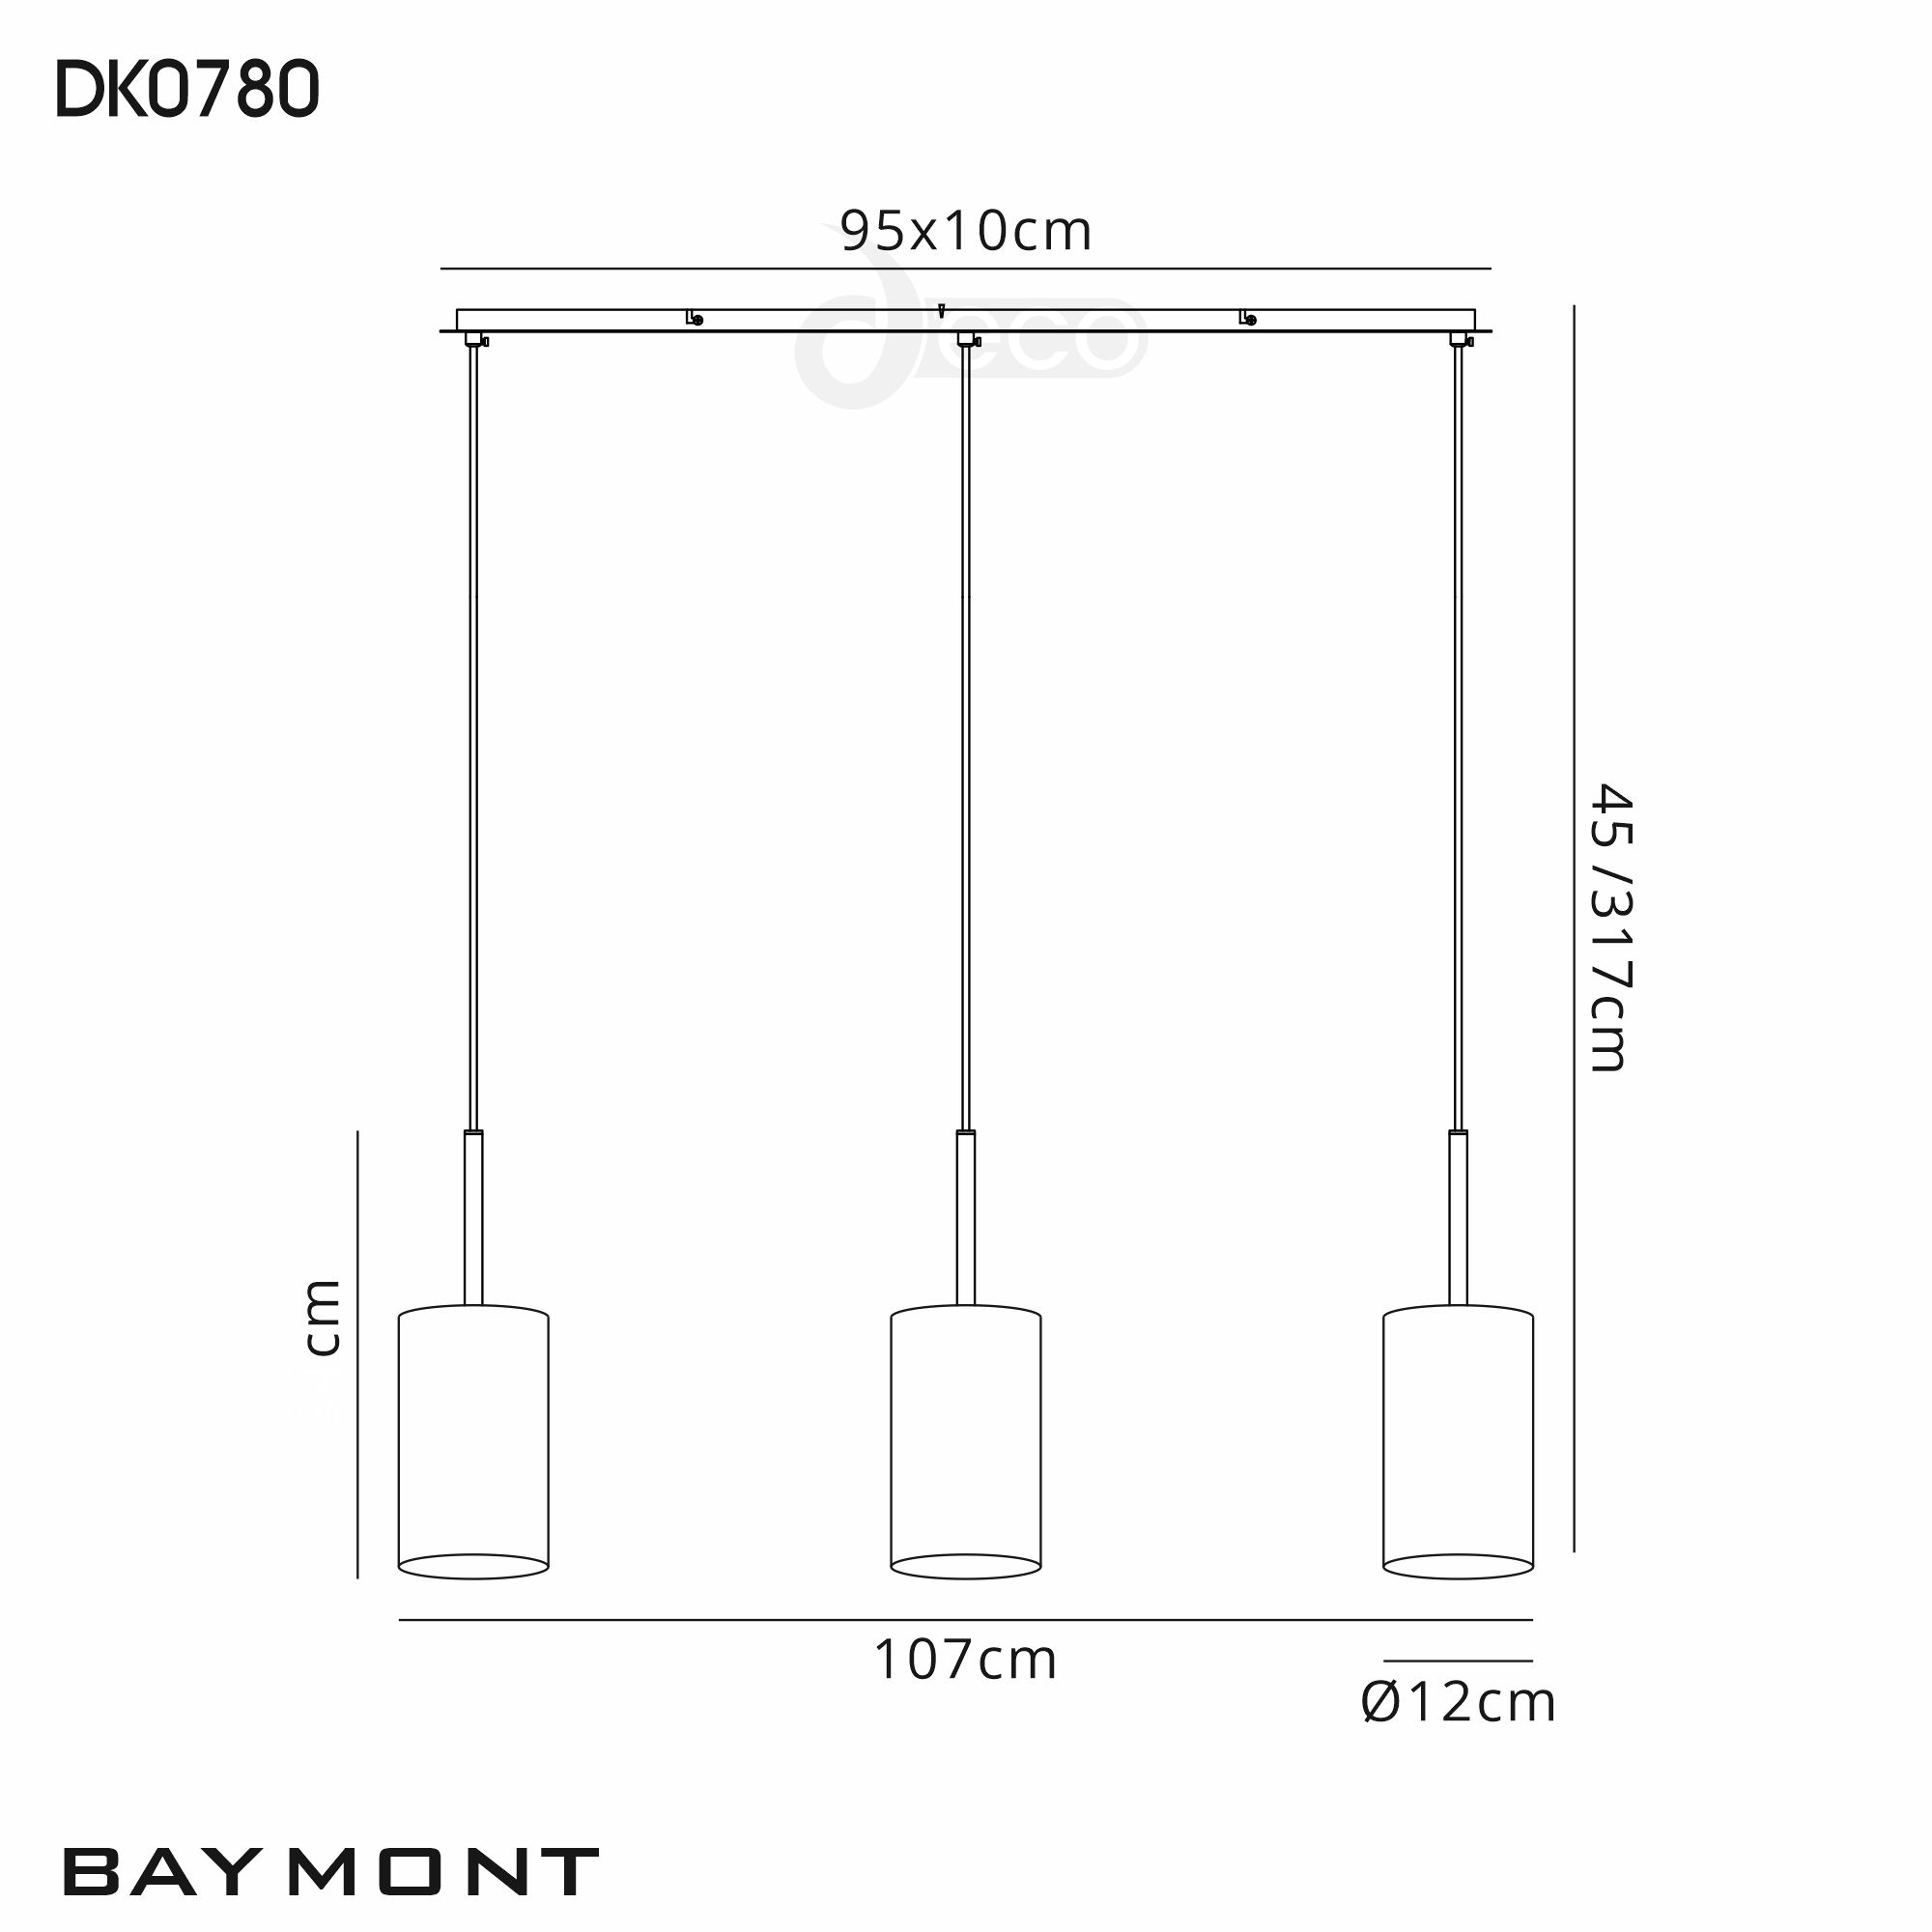 DK0780  Baymont 12cm Shade 3 Light Pendant Satin Nickel, Grey/White